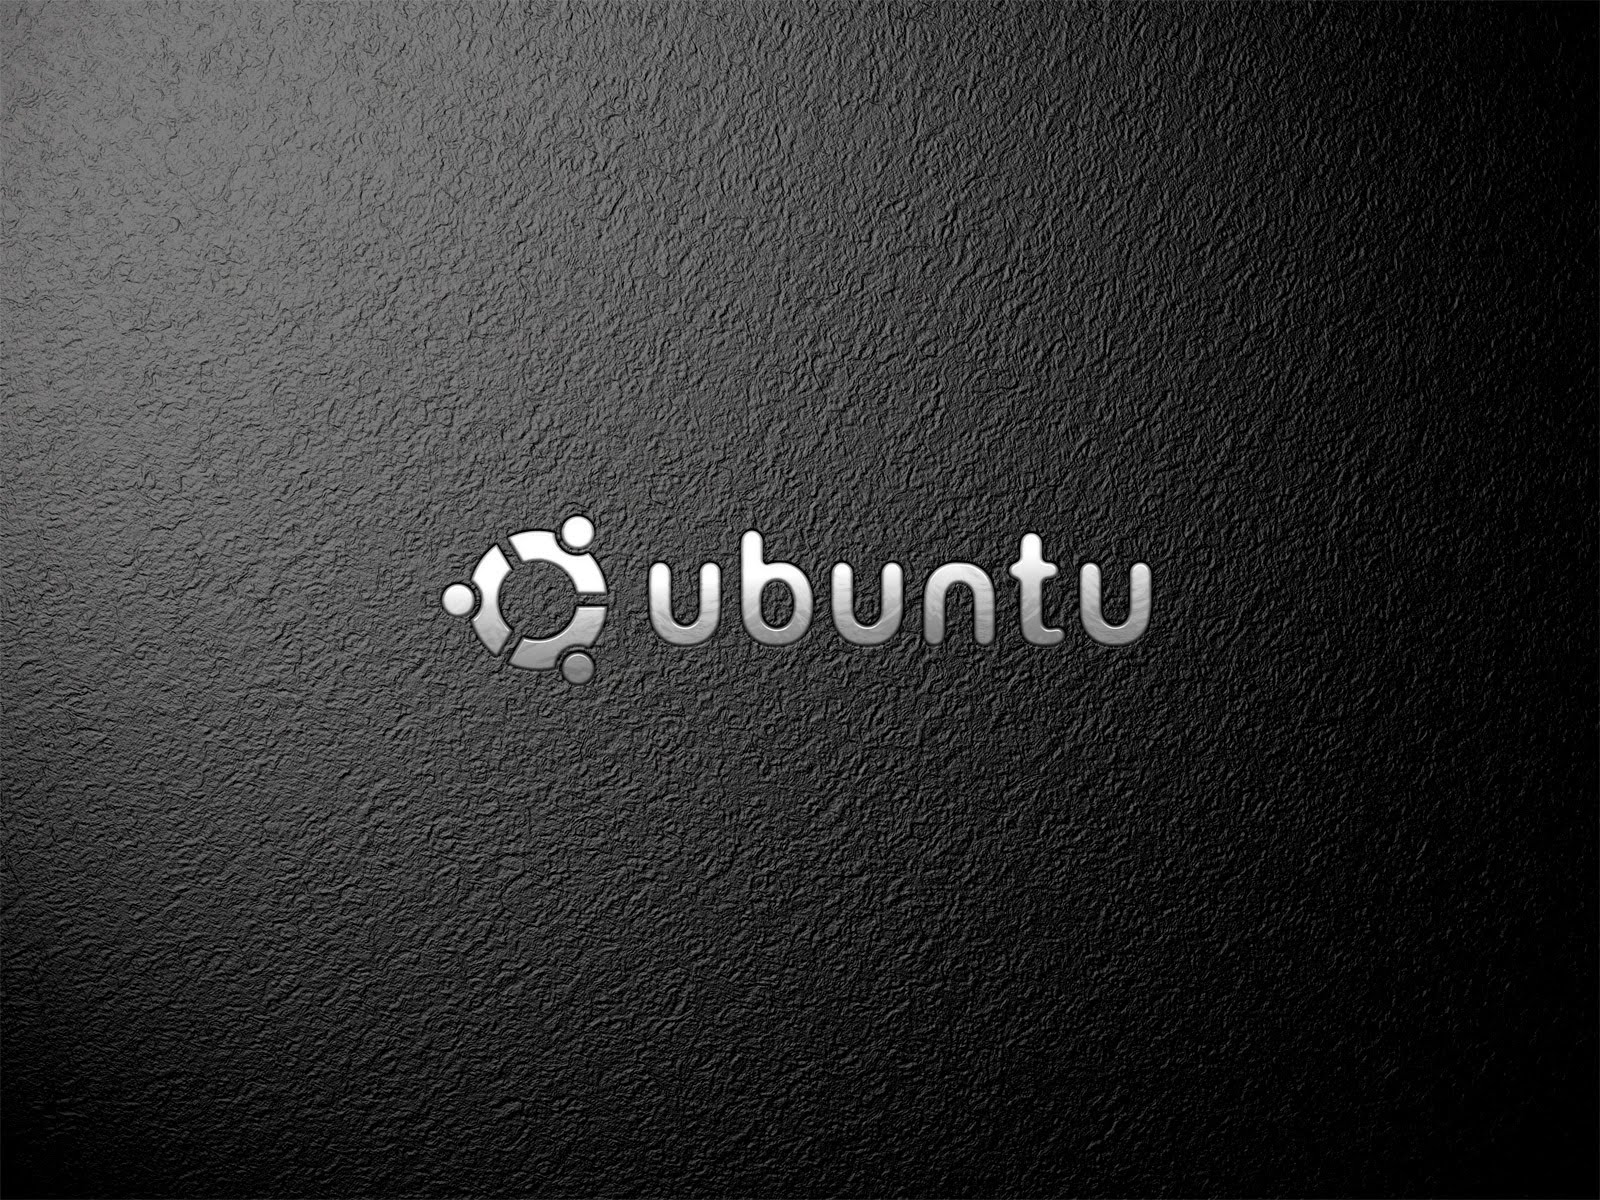 http://4.bp.blogspot.com/_mHpGUNwLSfs/S9QTZSgksgI/AAAAAAAABfg/UnwEDdNuLQY/s1600/Ubuntu-black-slate-background.jpg